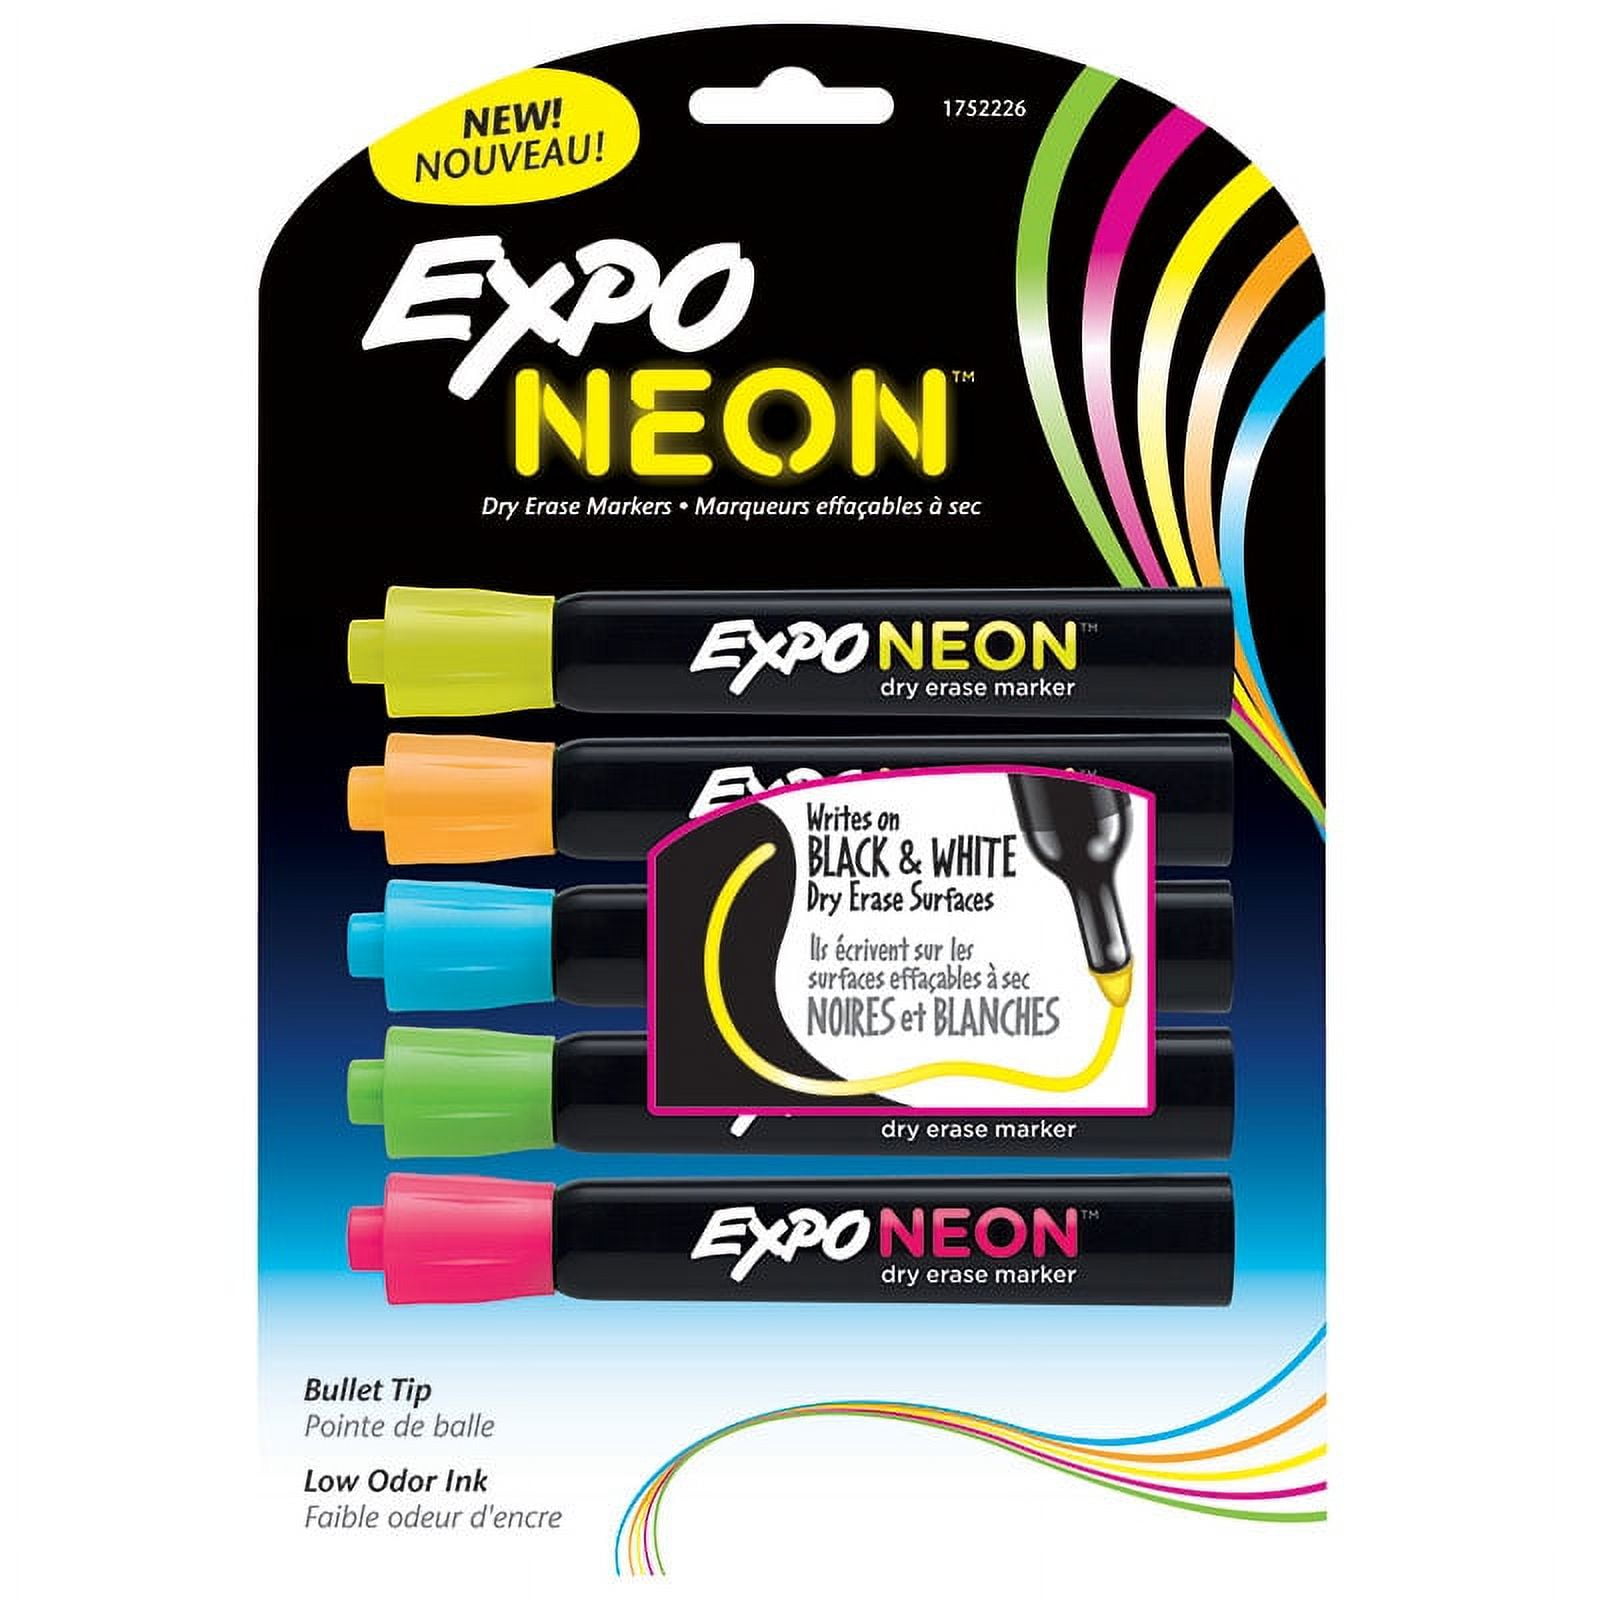 Expo® Dry Erase Markers - Assorted Neon S-22783 - Uline